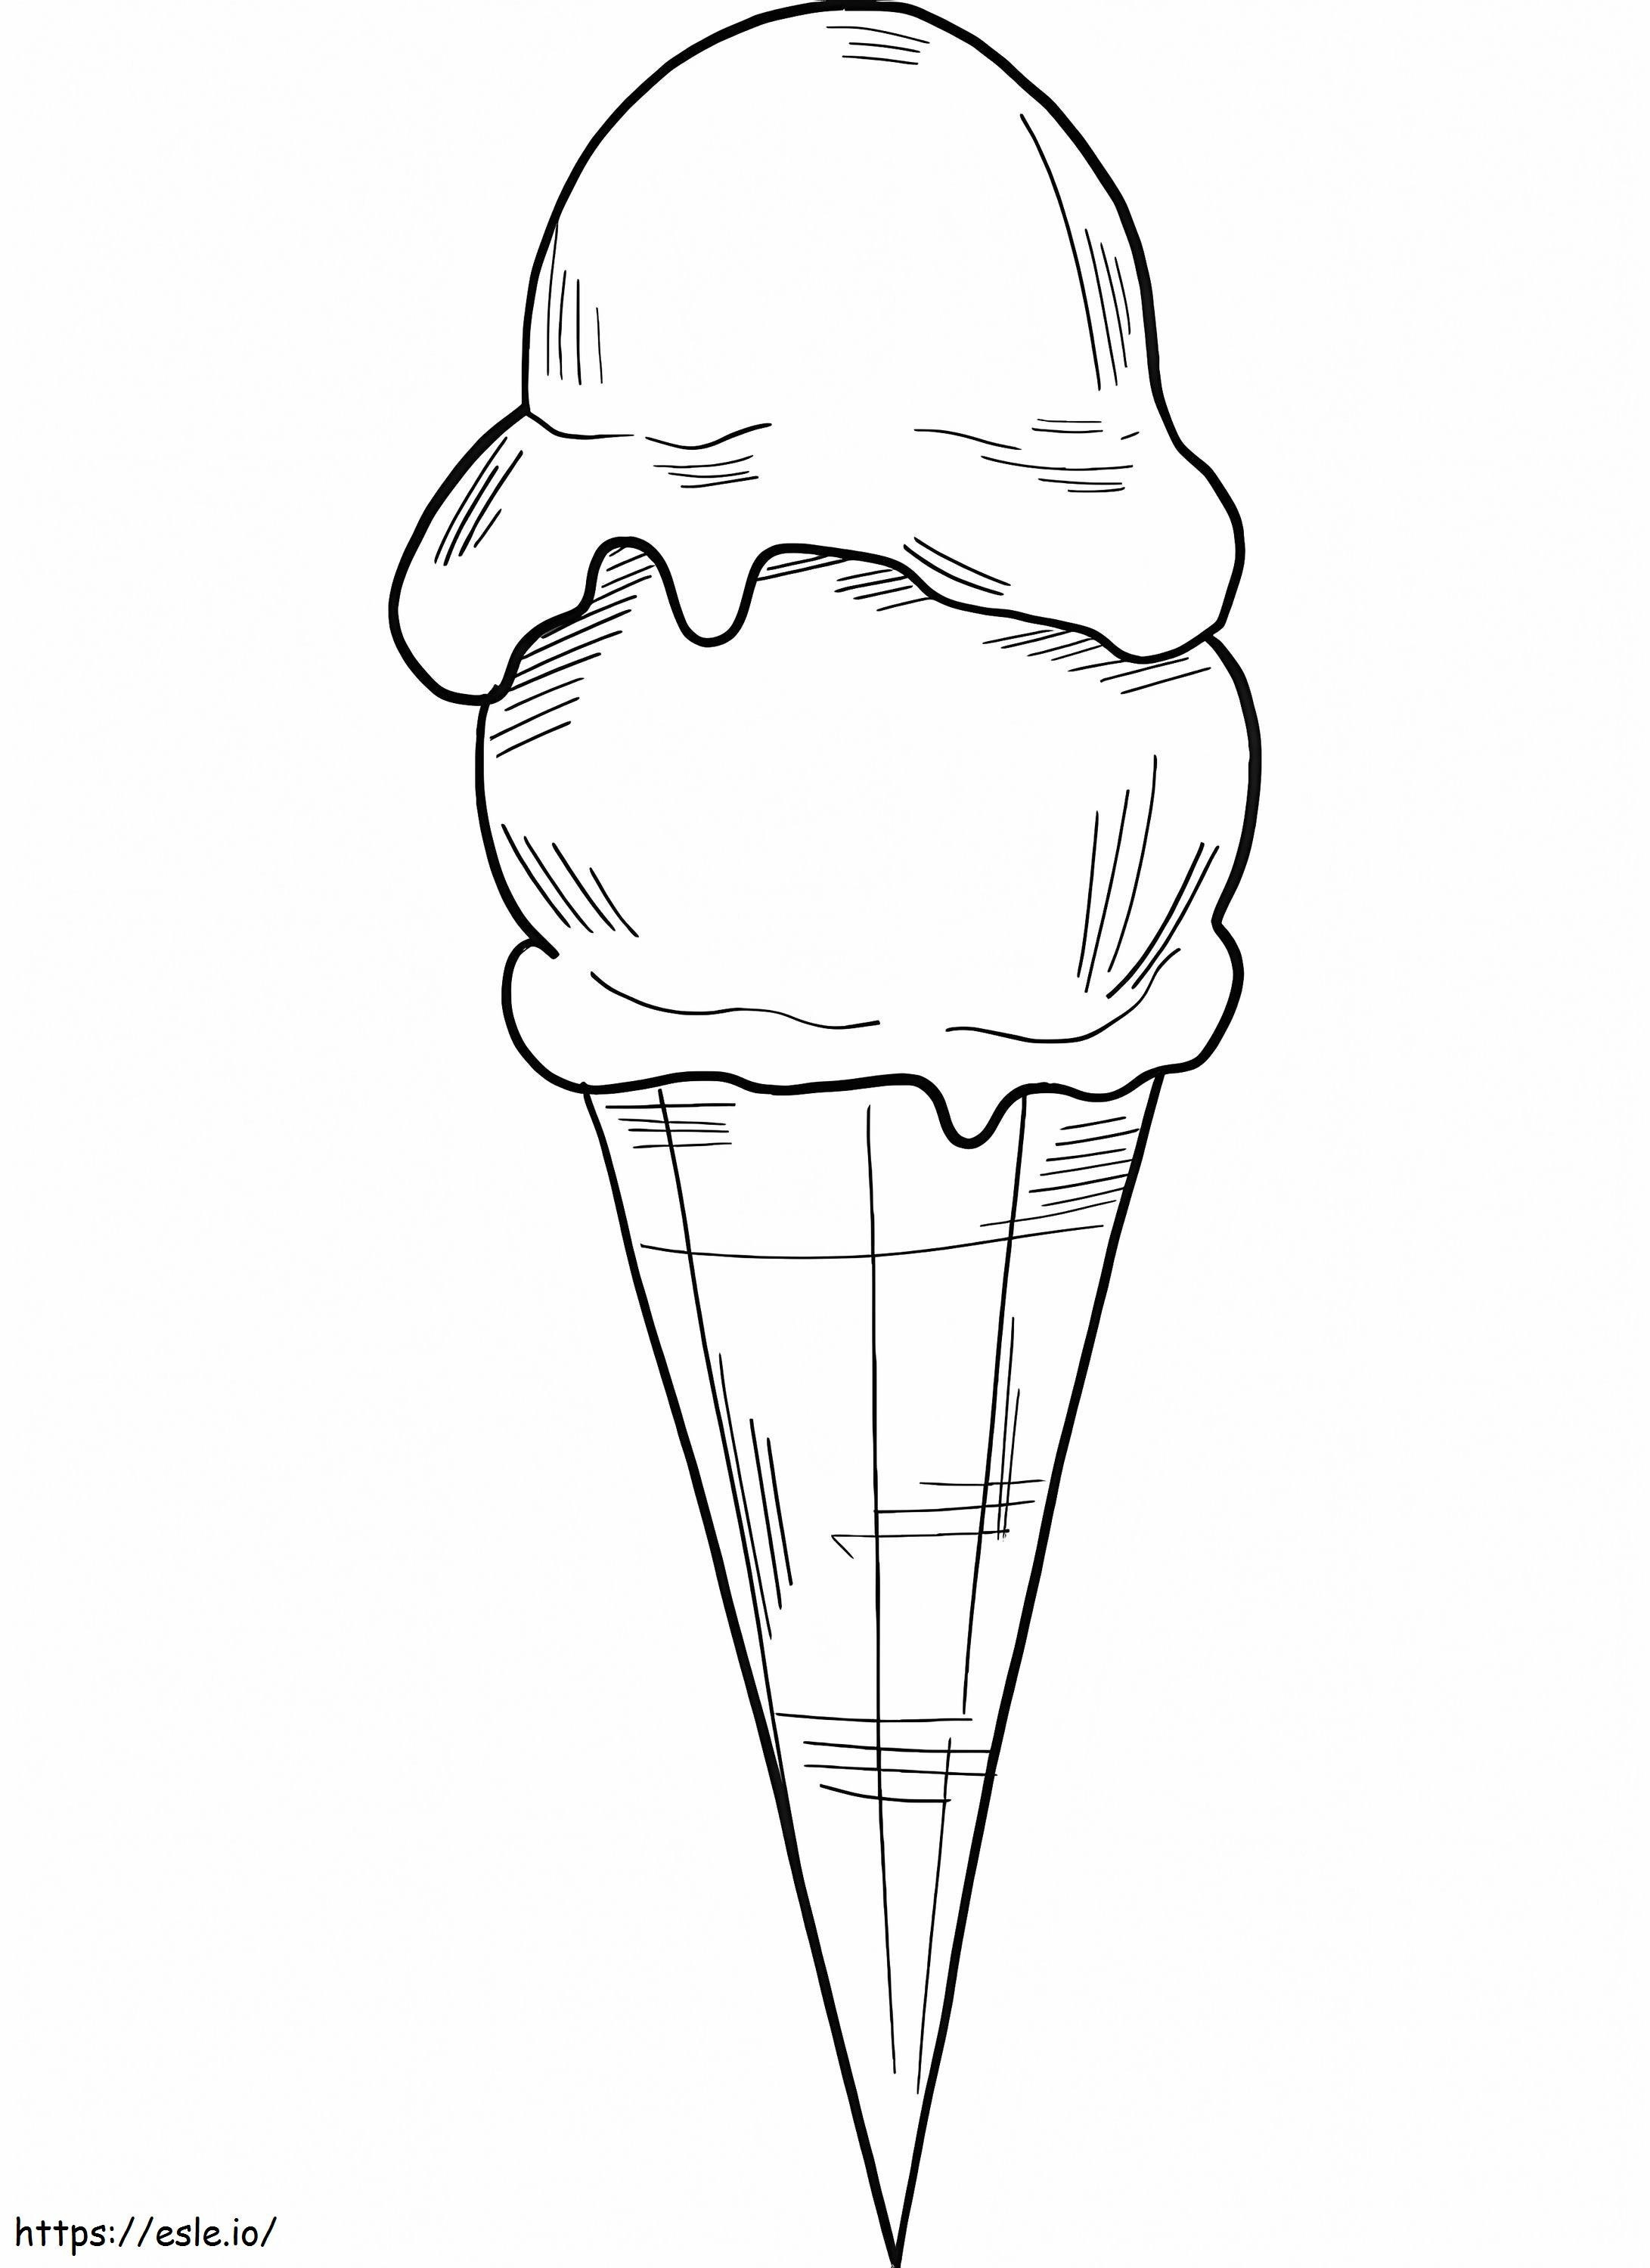 Ice Cream Cone 2 coloring page